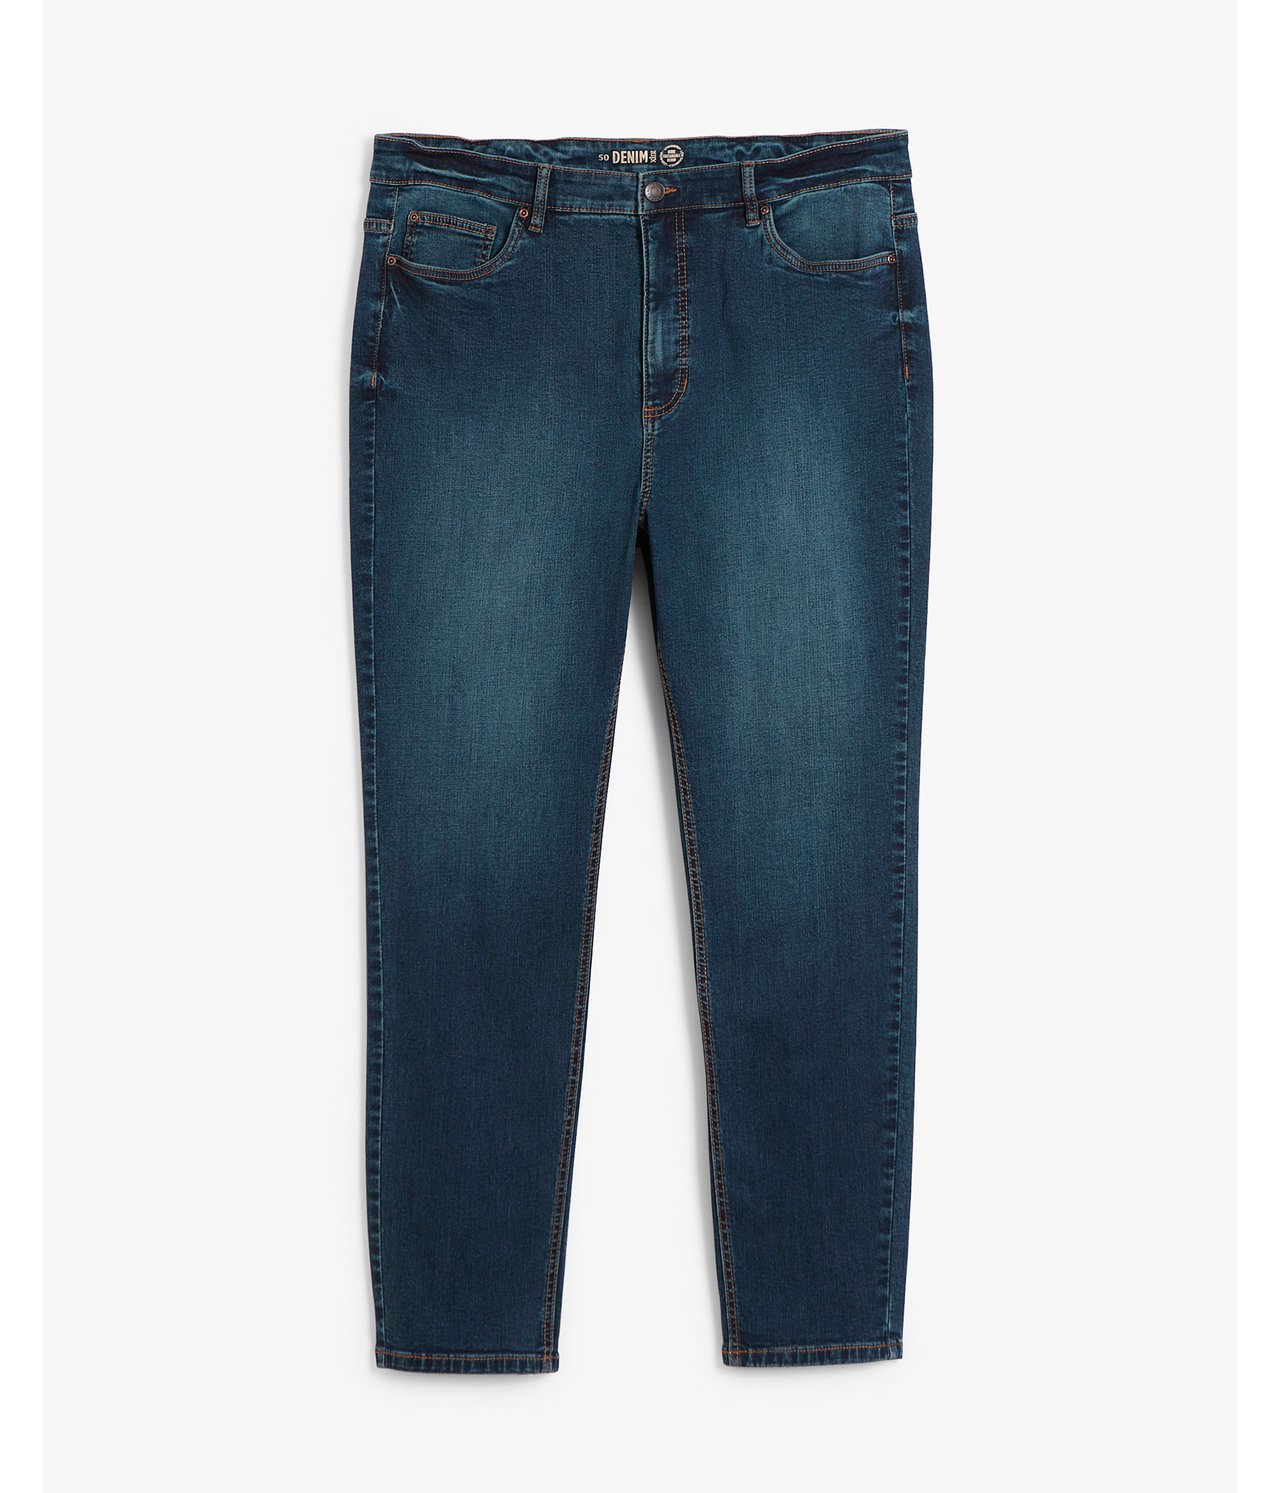 Jenny jeans straight slim fit - Denimi - 6